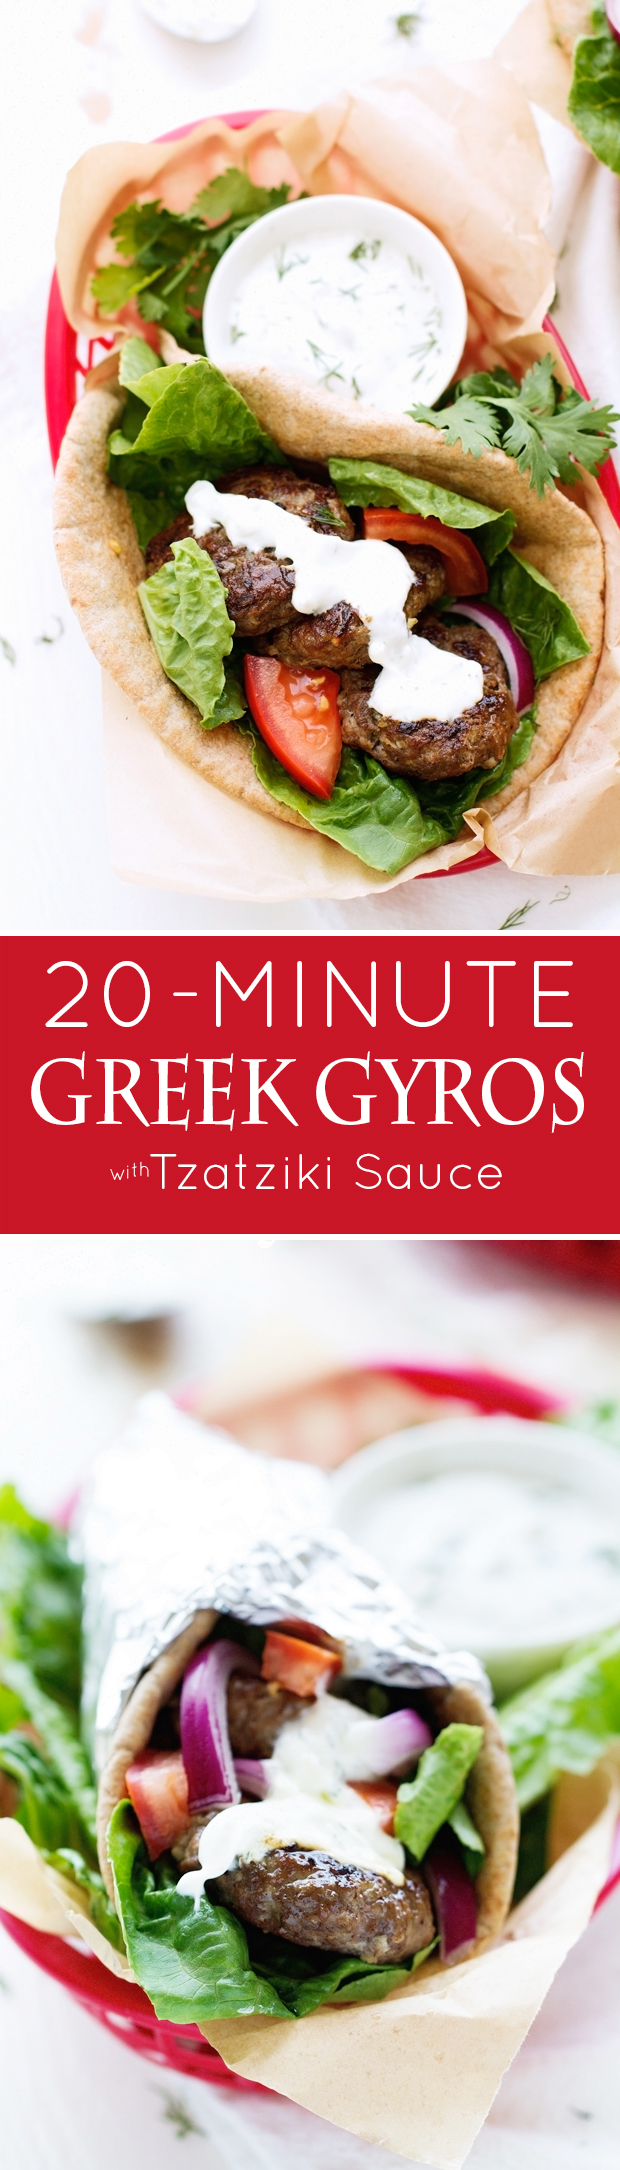 20 Minute Greek Gyros With Tzatziki Sauce Recipe Little Spice Jar,Palm Sugar Thai